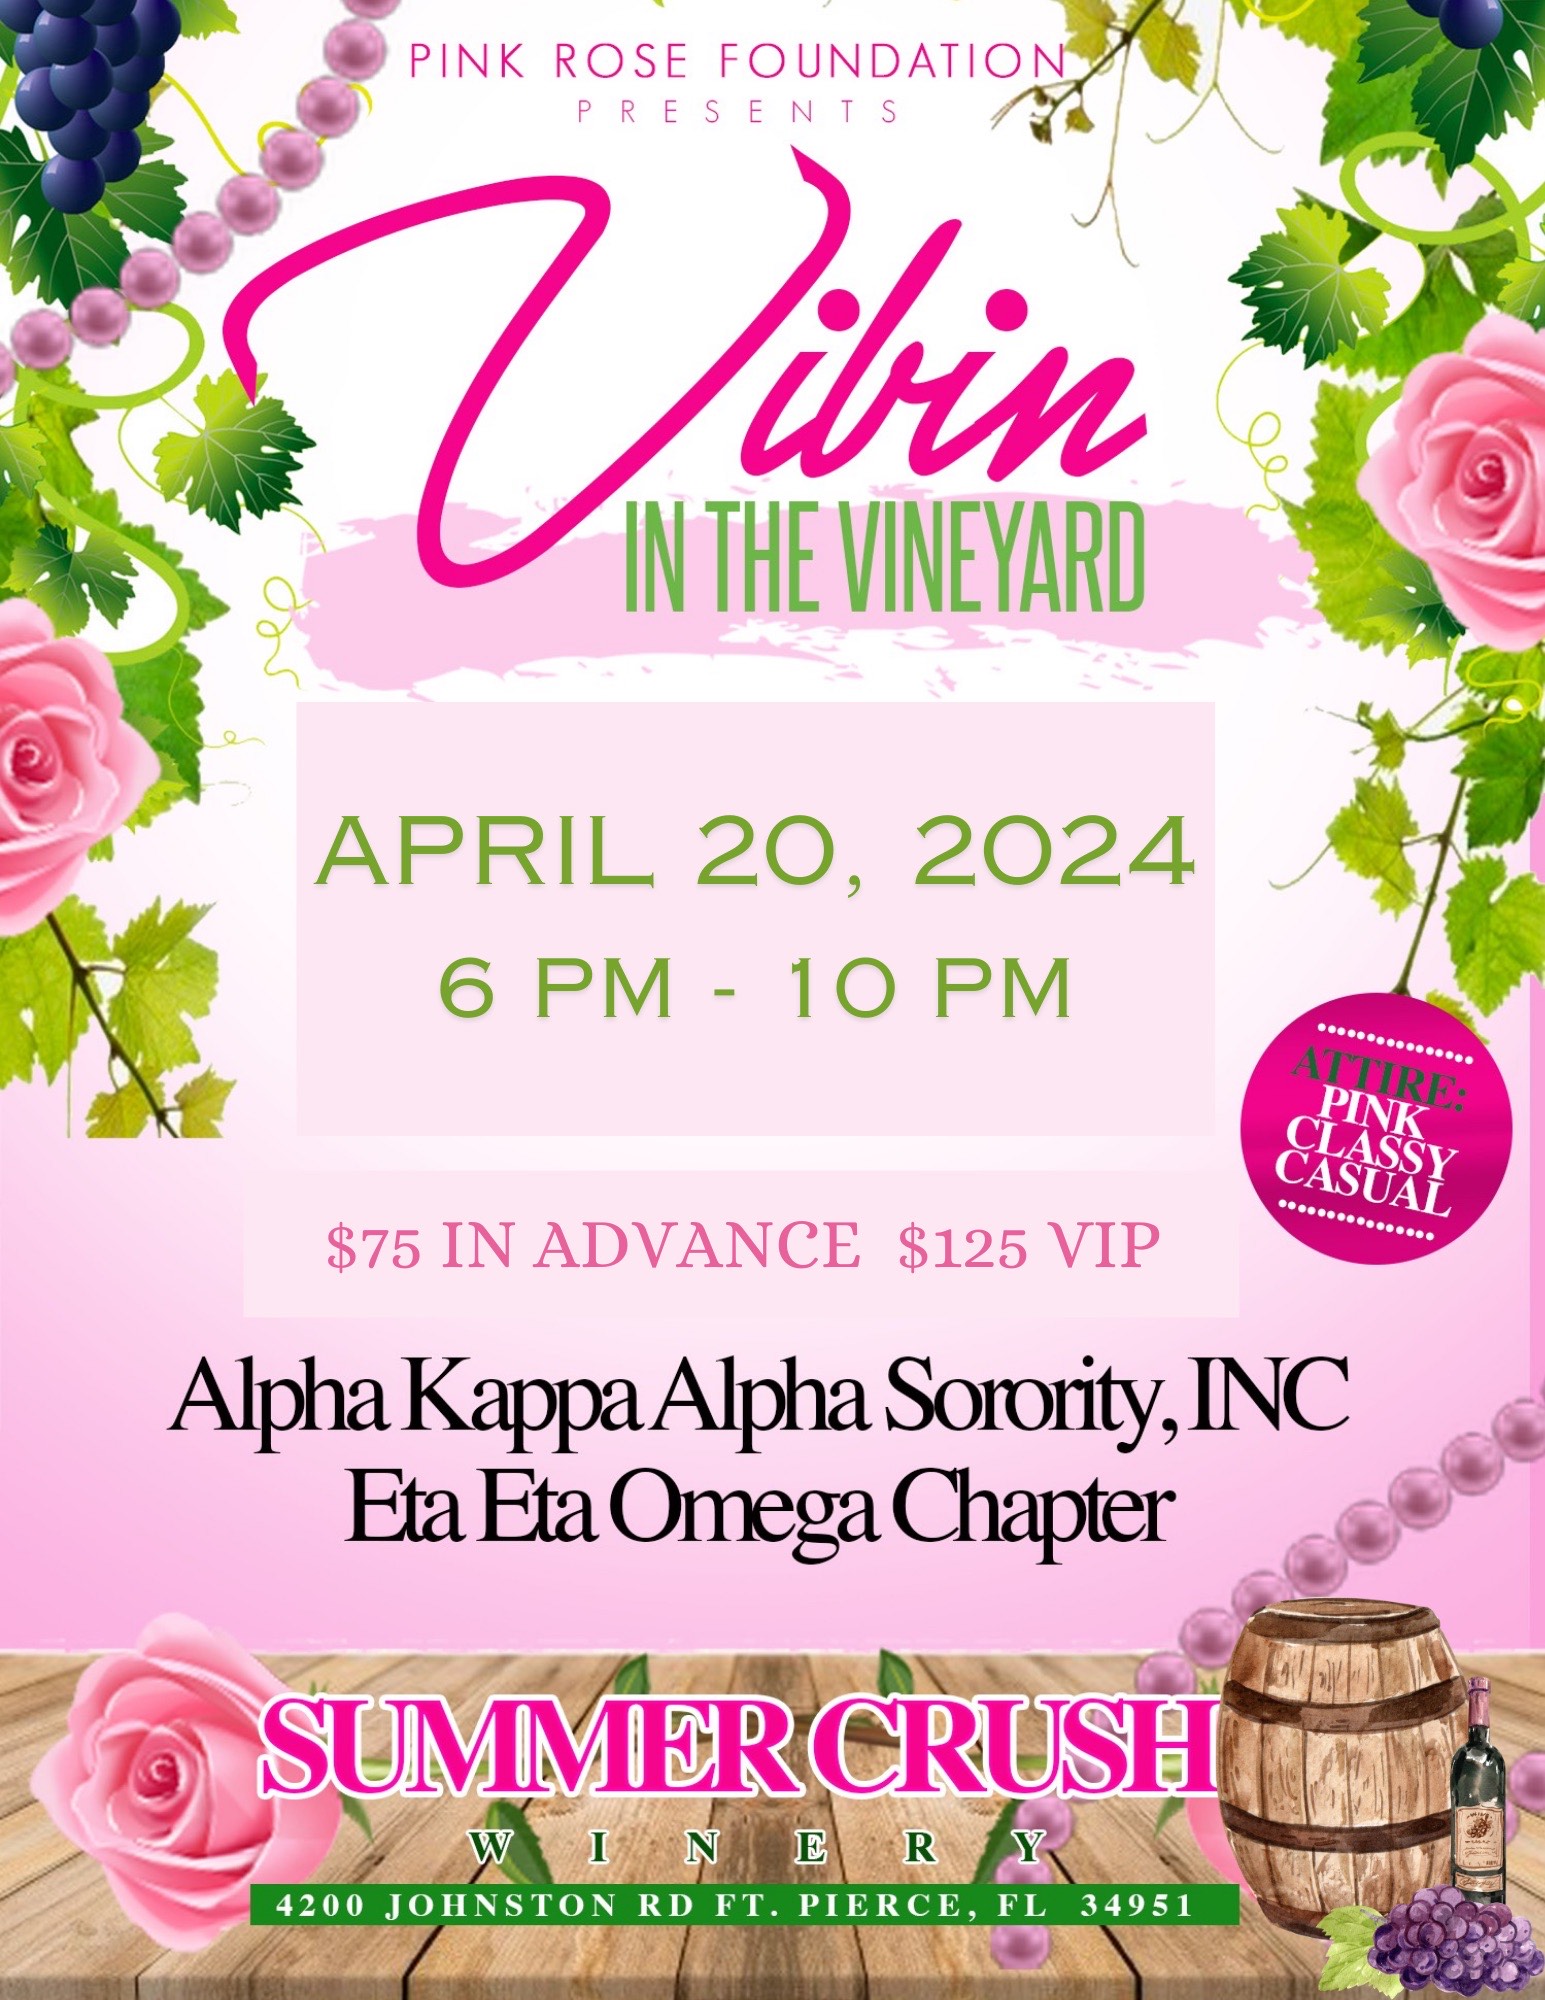 Pink Rose Foundation Presents: Vibin' in the Vineyard